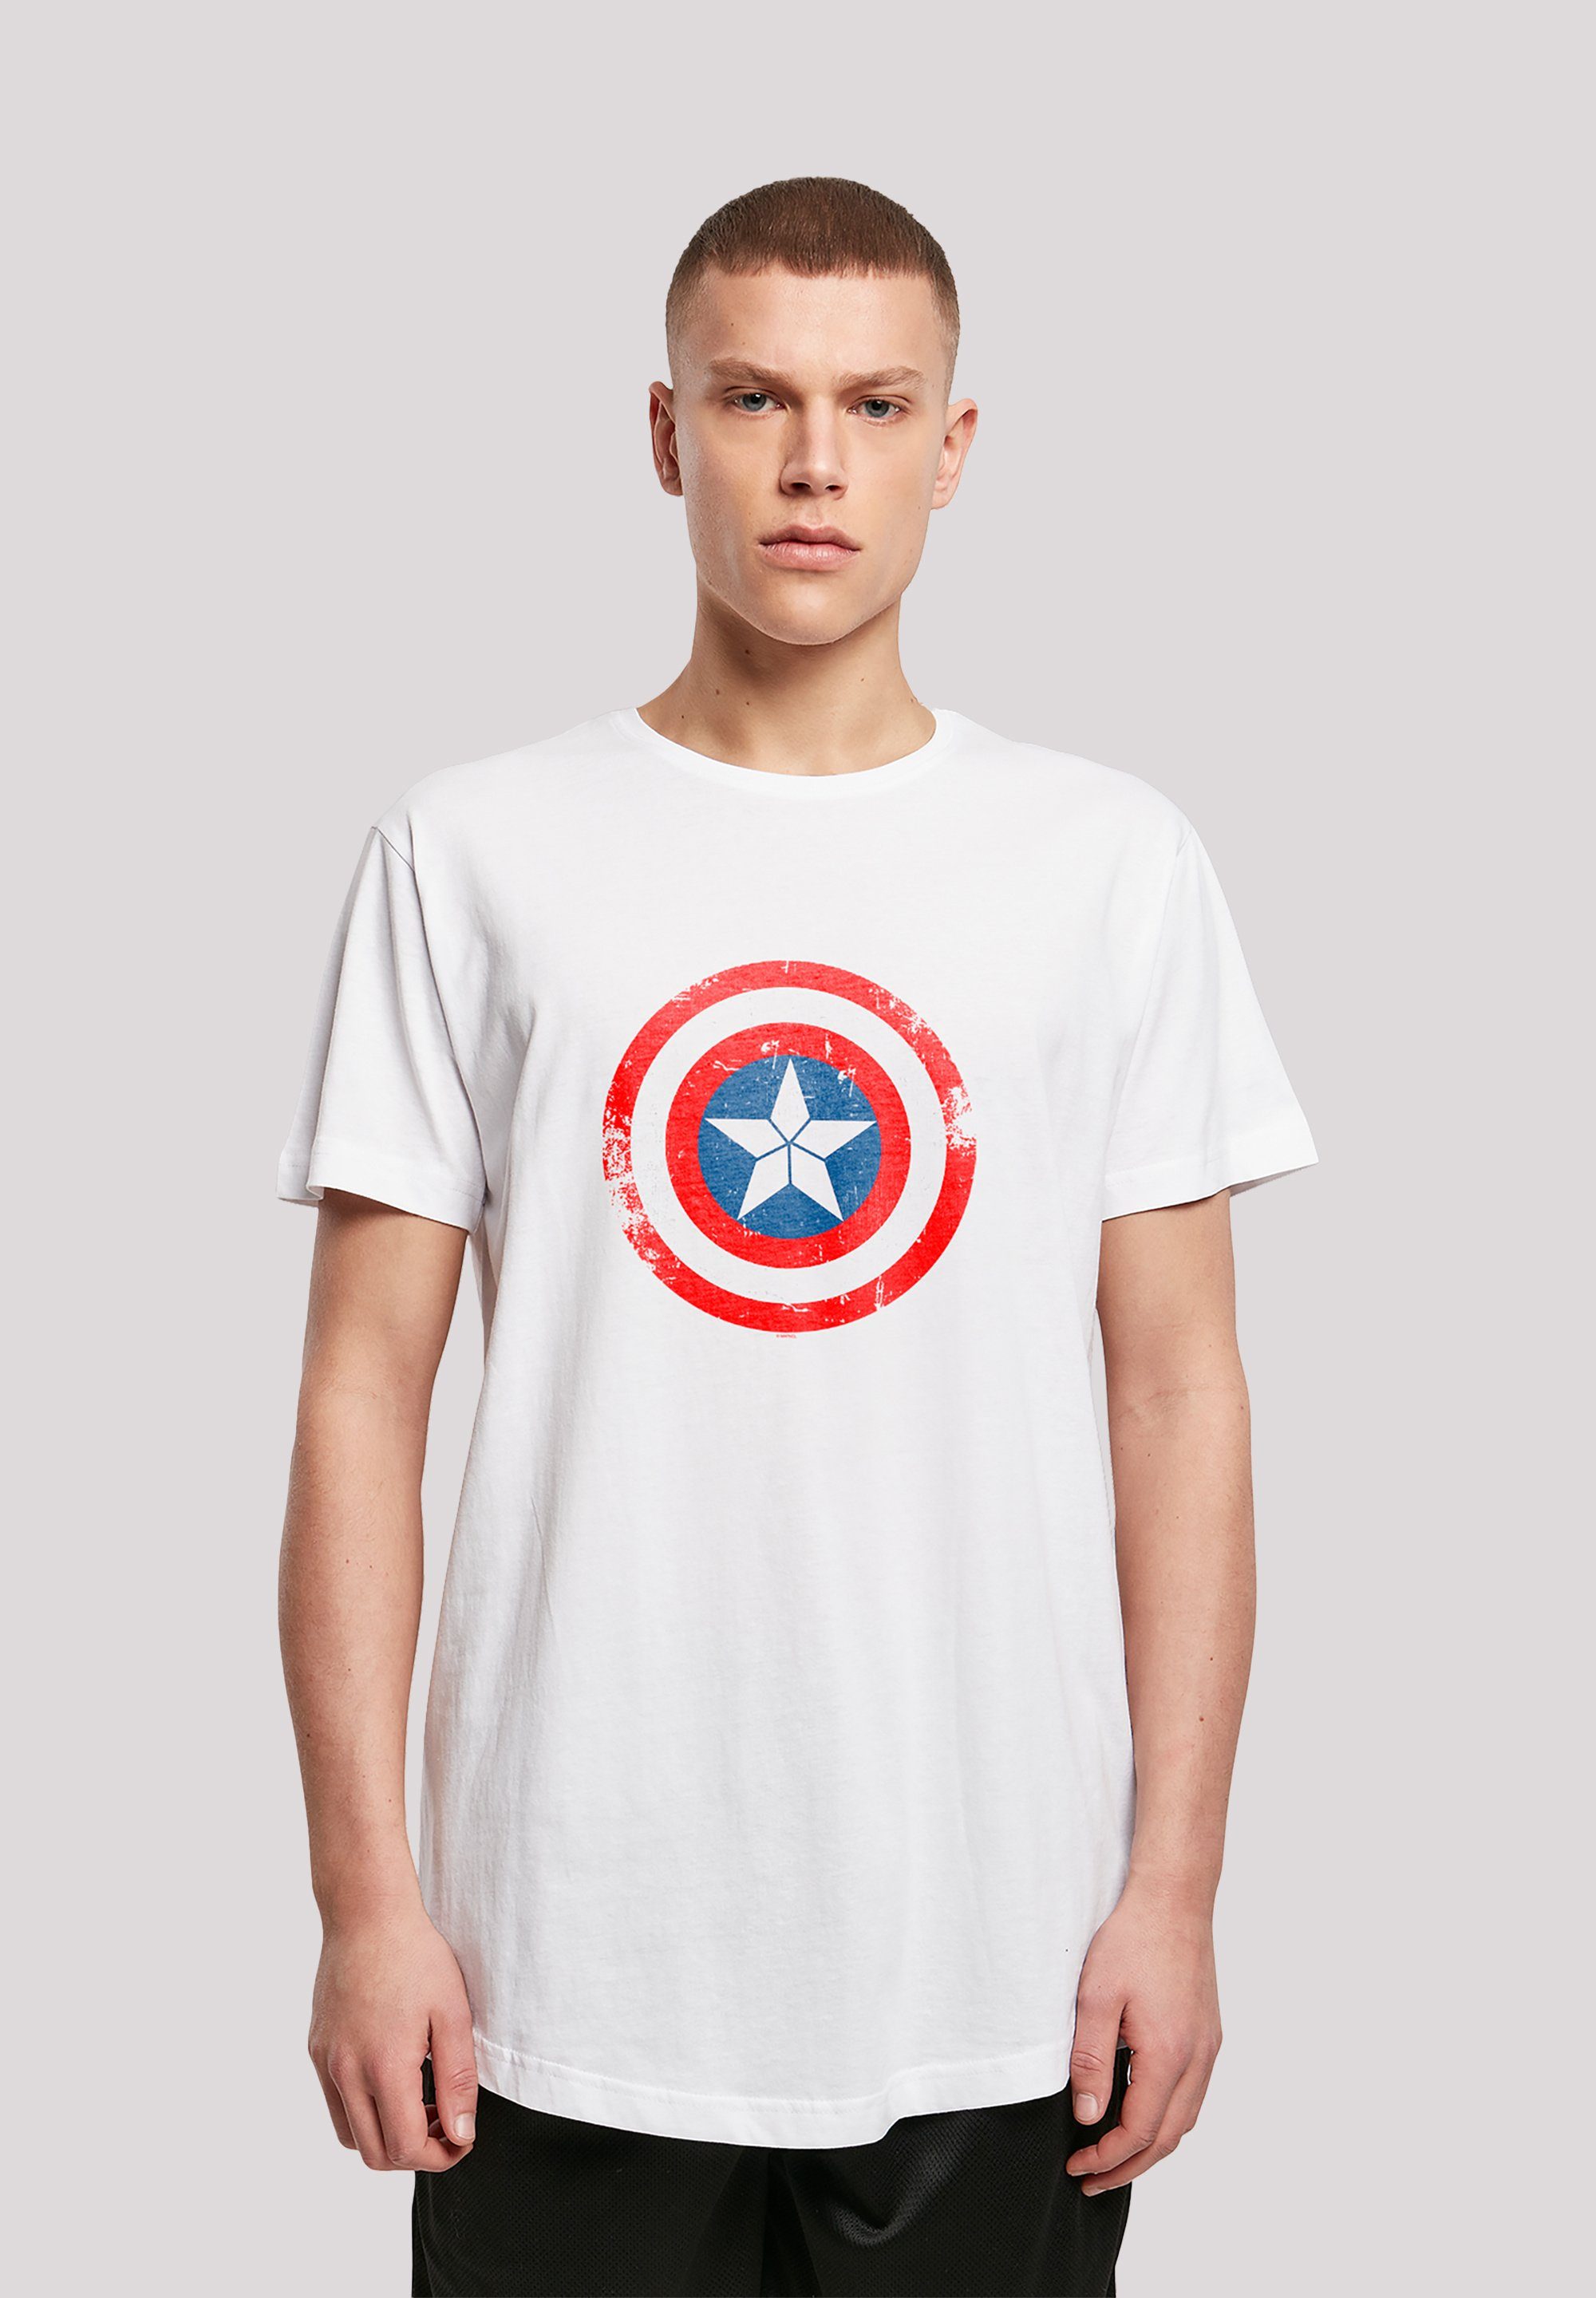 T-Shirt War weiß Marvel Civil Schild America Print Captain F4NT4STIC